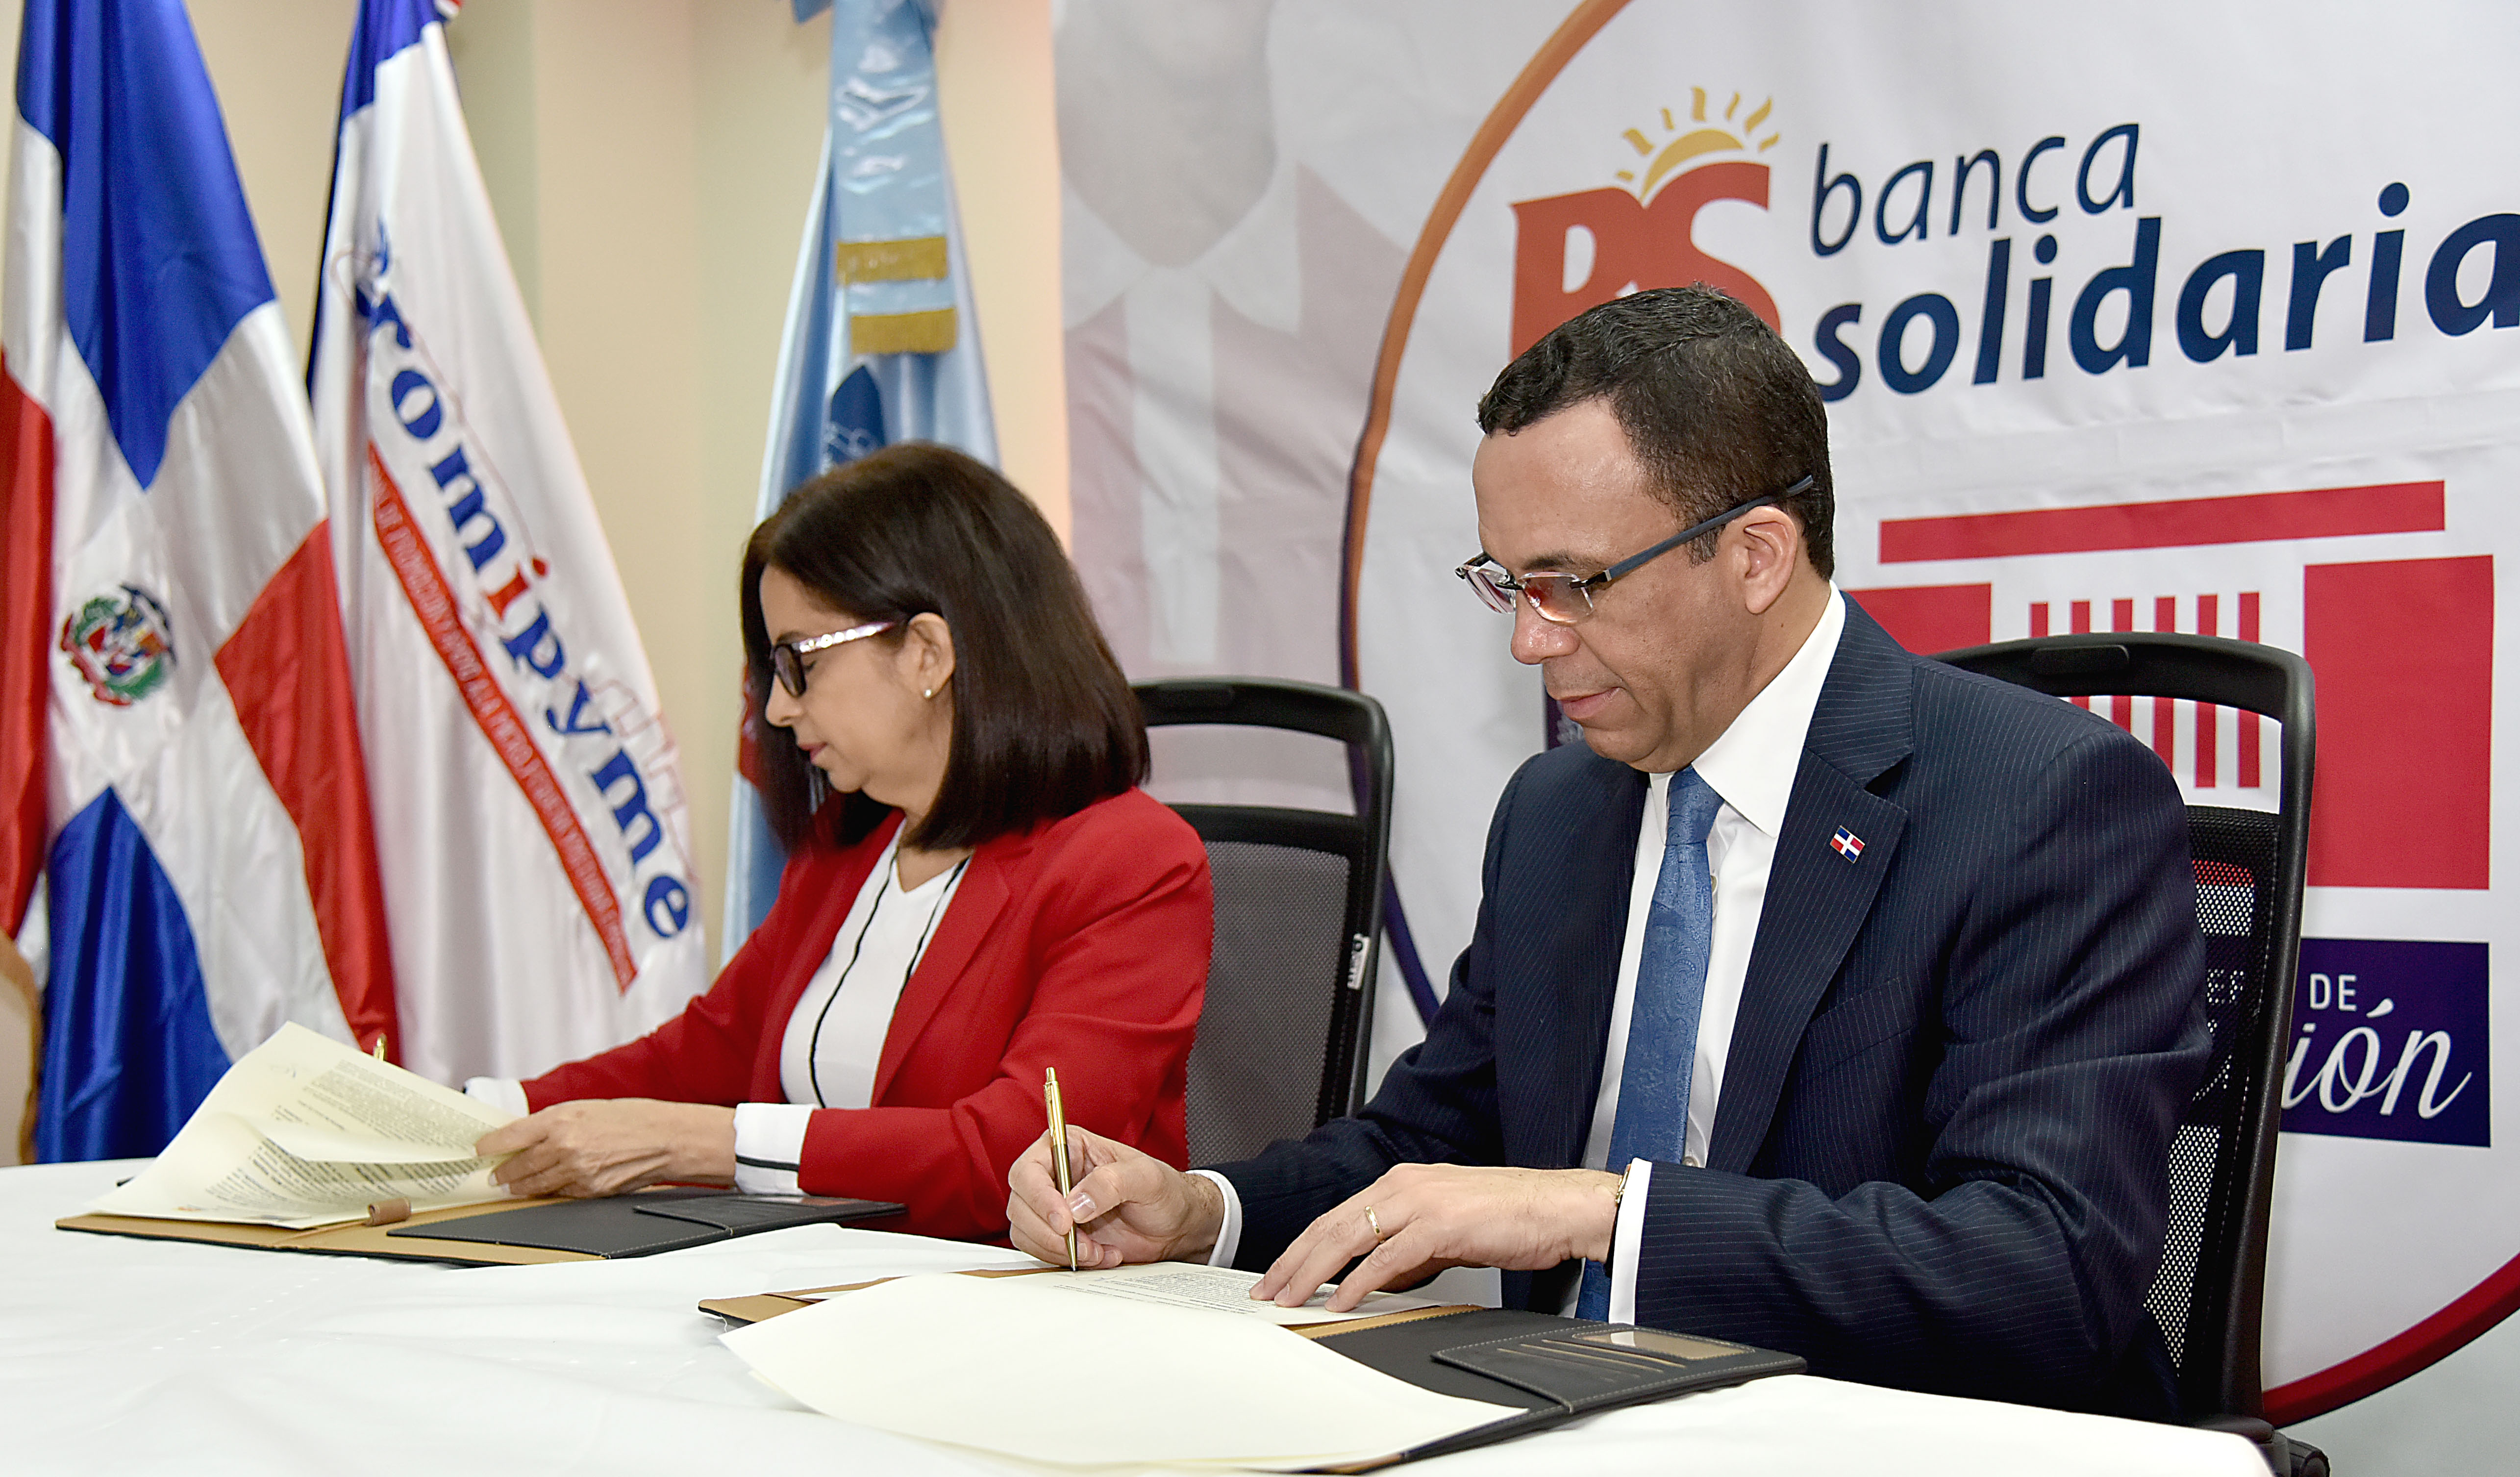  imagen Ministro Andrés Navarro y directora de Banca, Solidaria Maira Jiménez Pérez sentados firmando acuerdo interinstitucional  